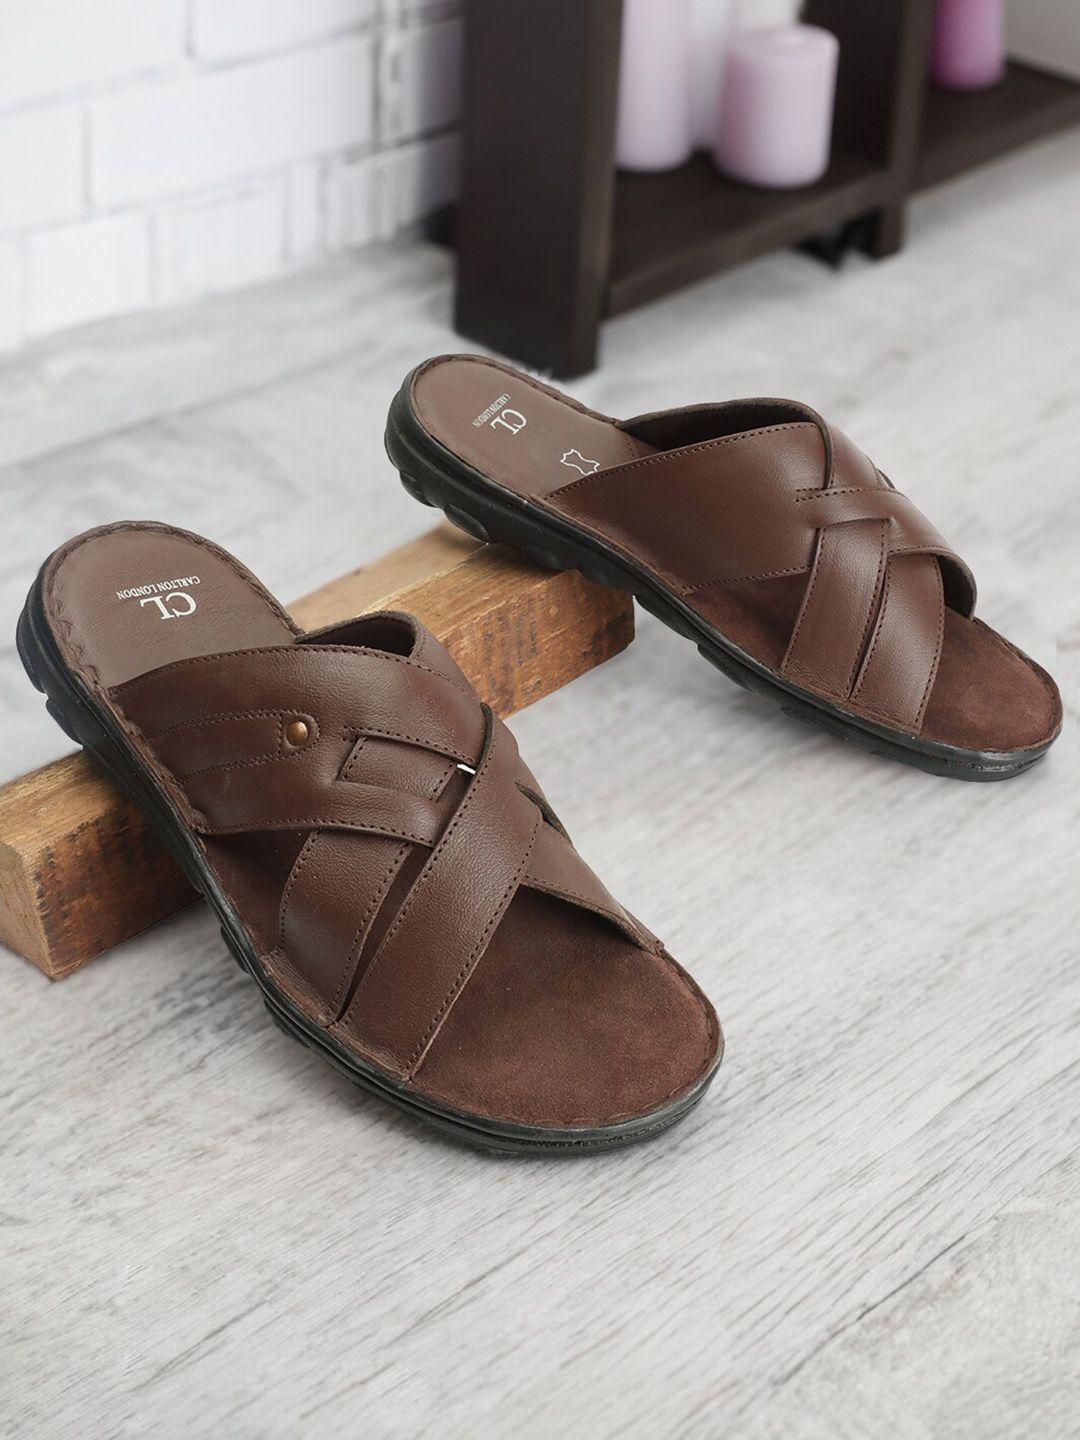 carlton-london-leather-open-toe-comfort-sandals